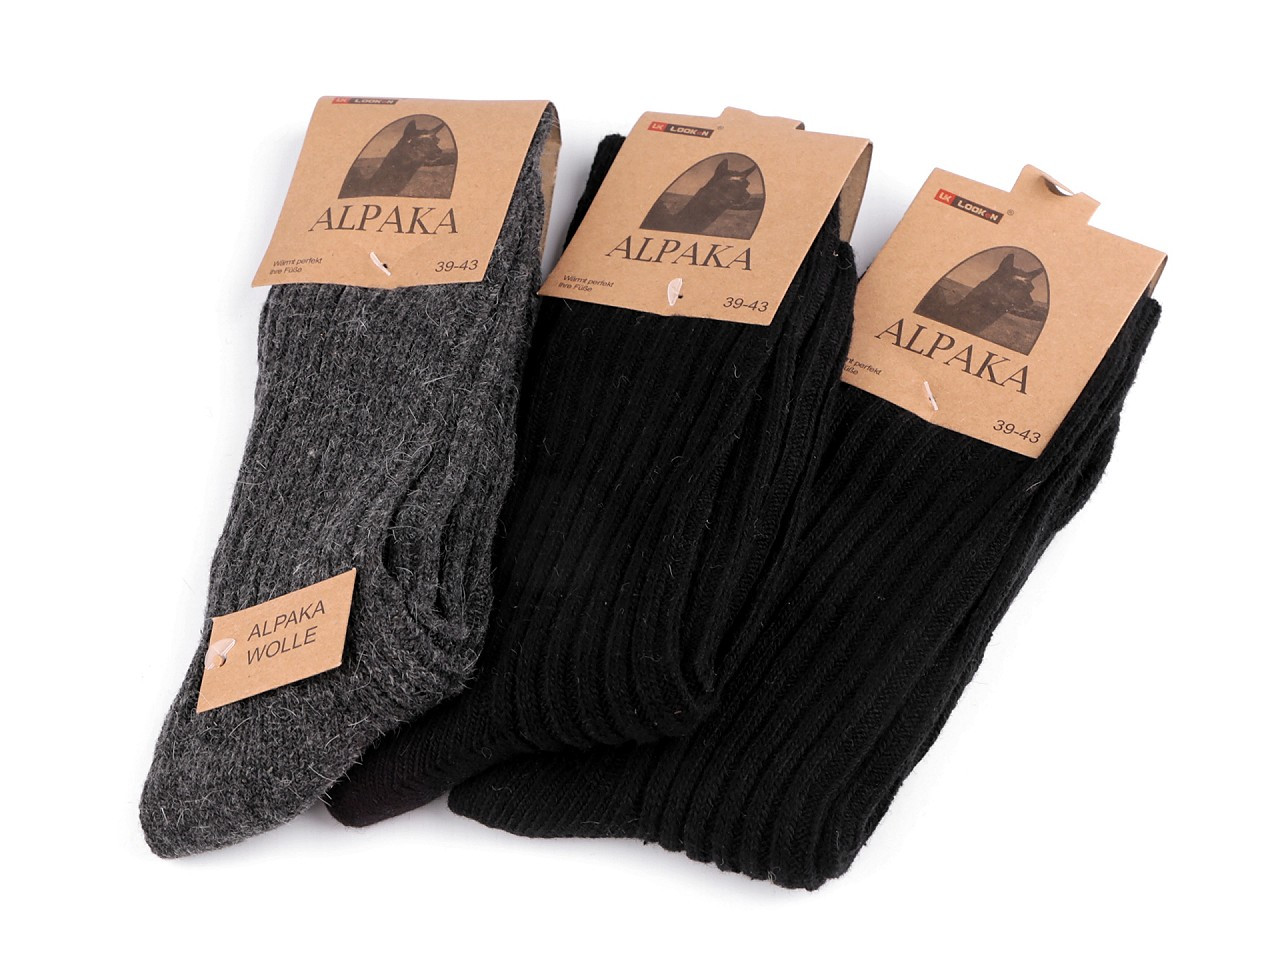 Pánské ponožky thermo Alpaka, barva 6 (vel. 39-43) mix náhodný